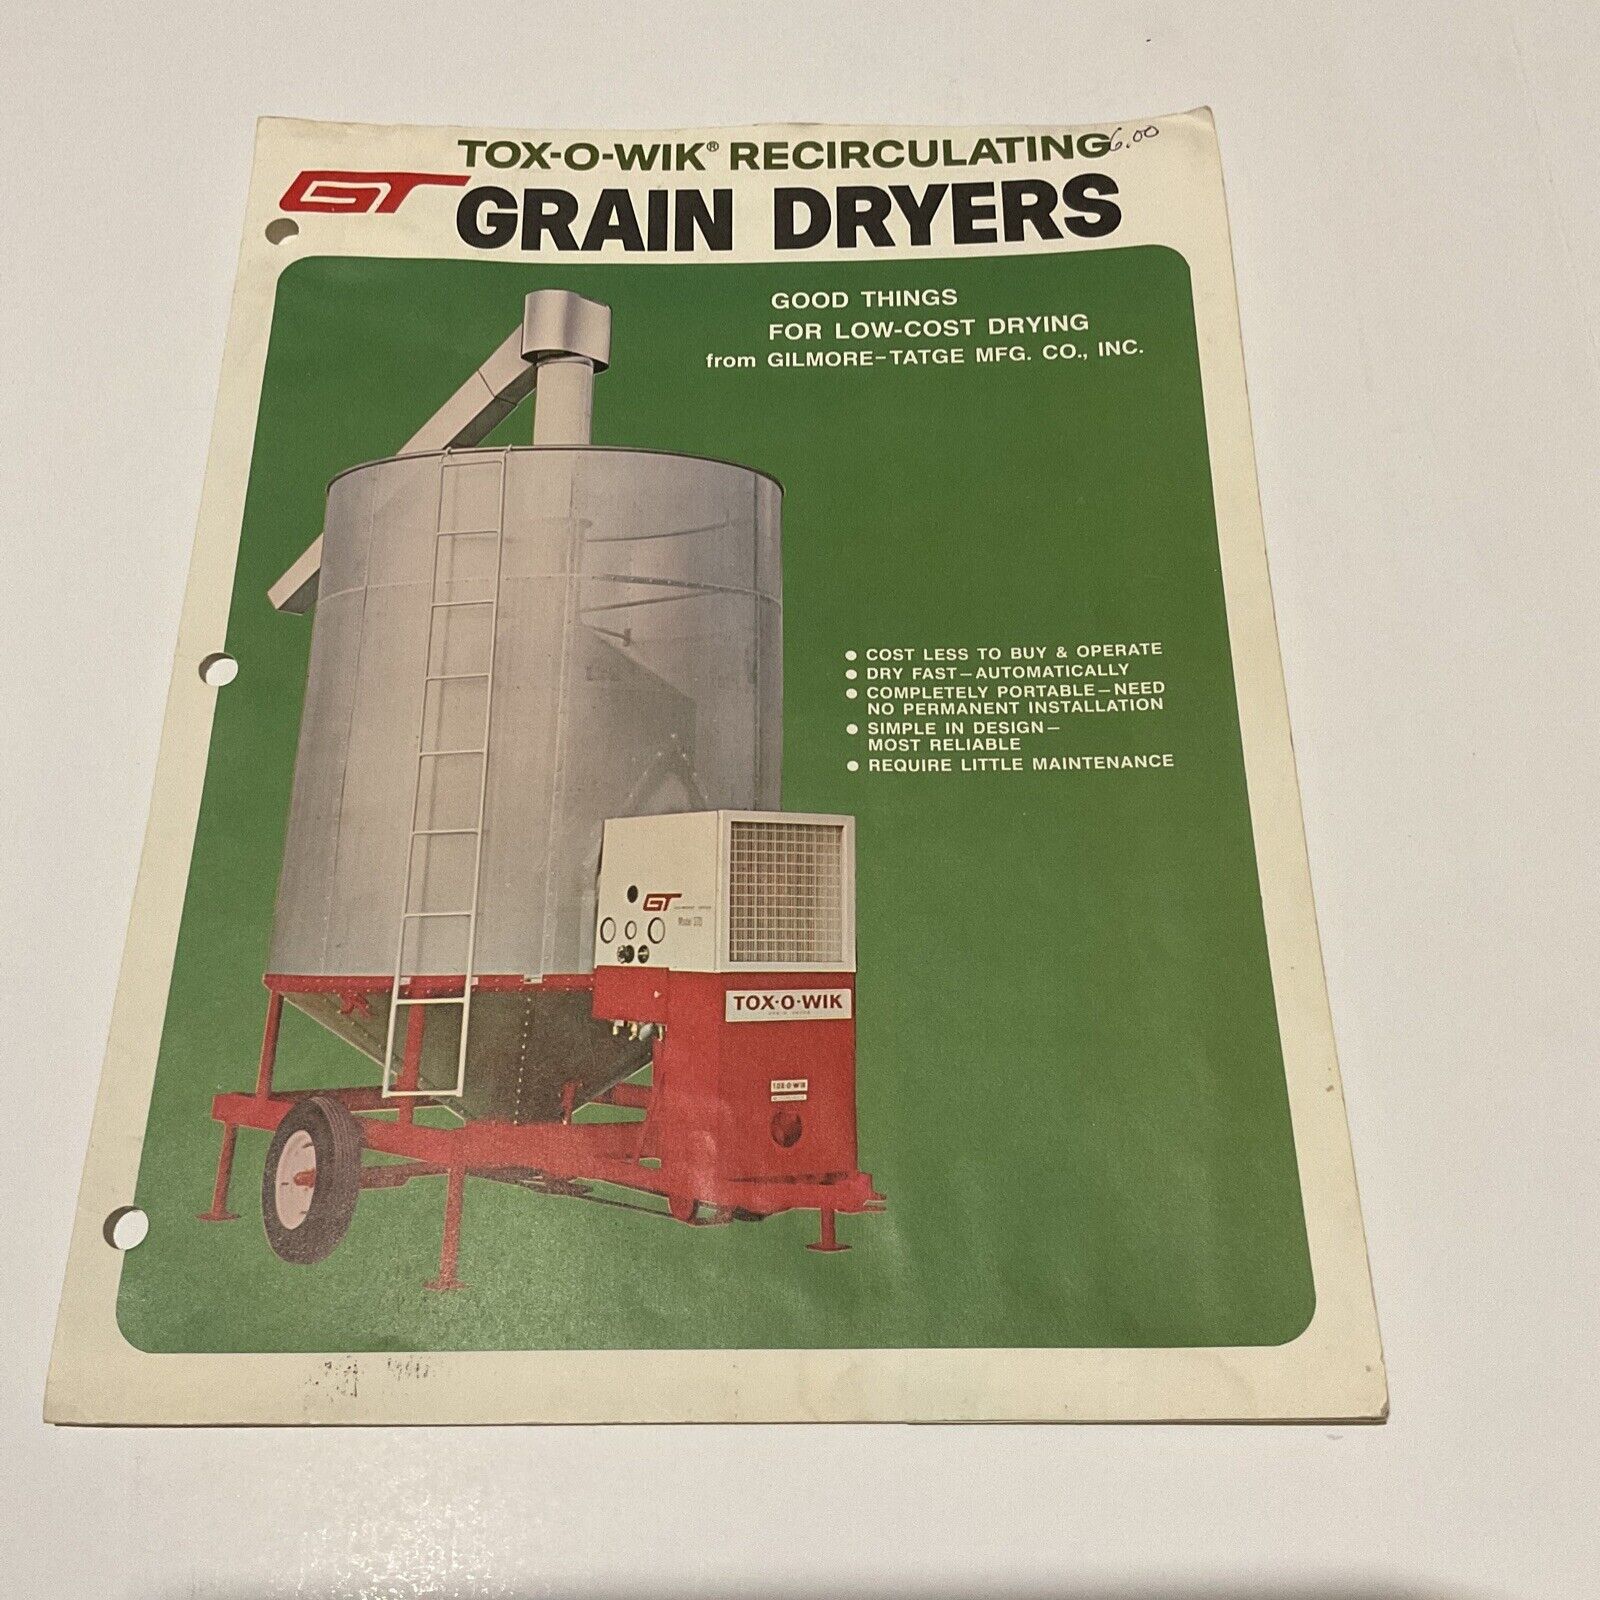 GT Tox-O-Wik Recirculating Grain Dryer Brochure Vintage BAOH Prop Set Design